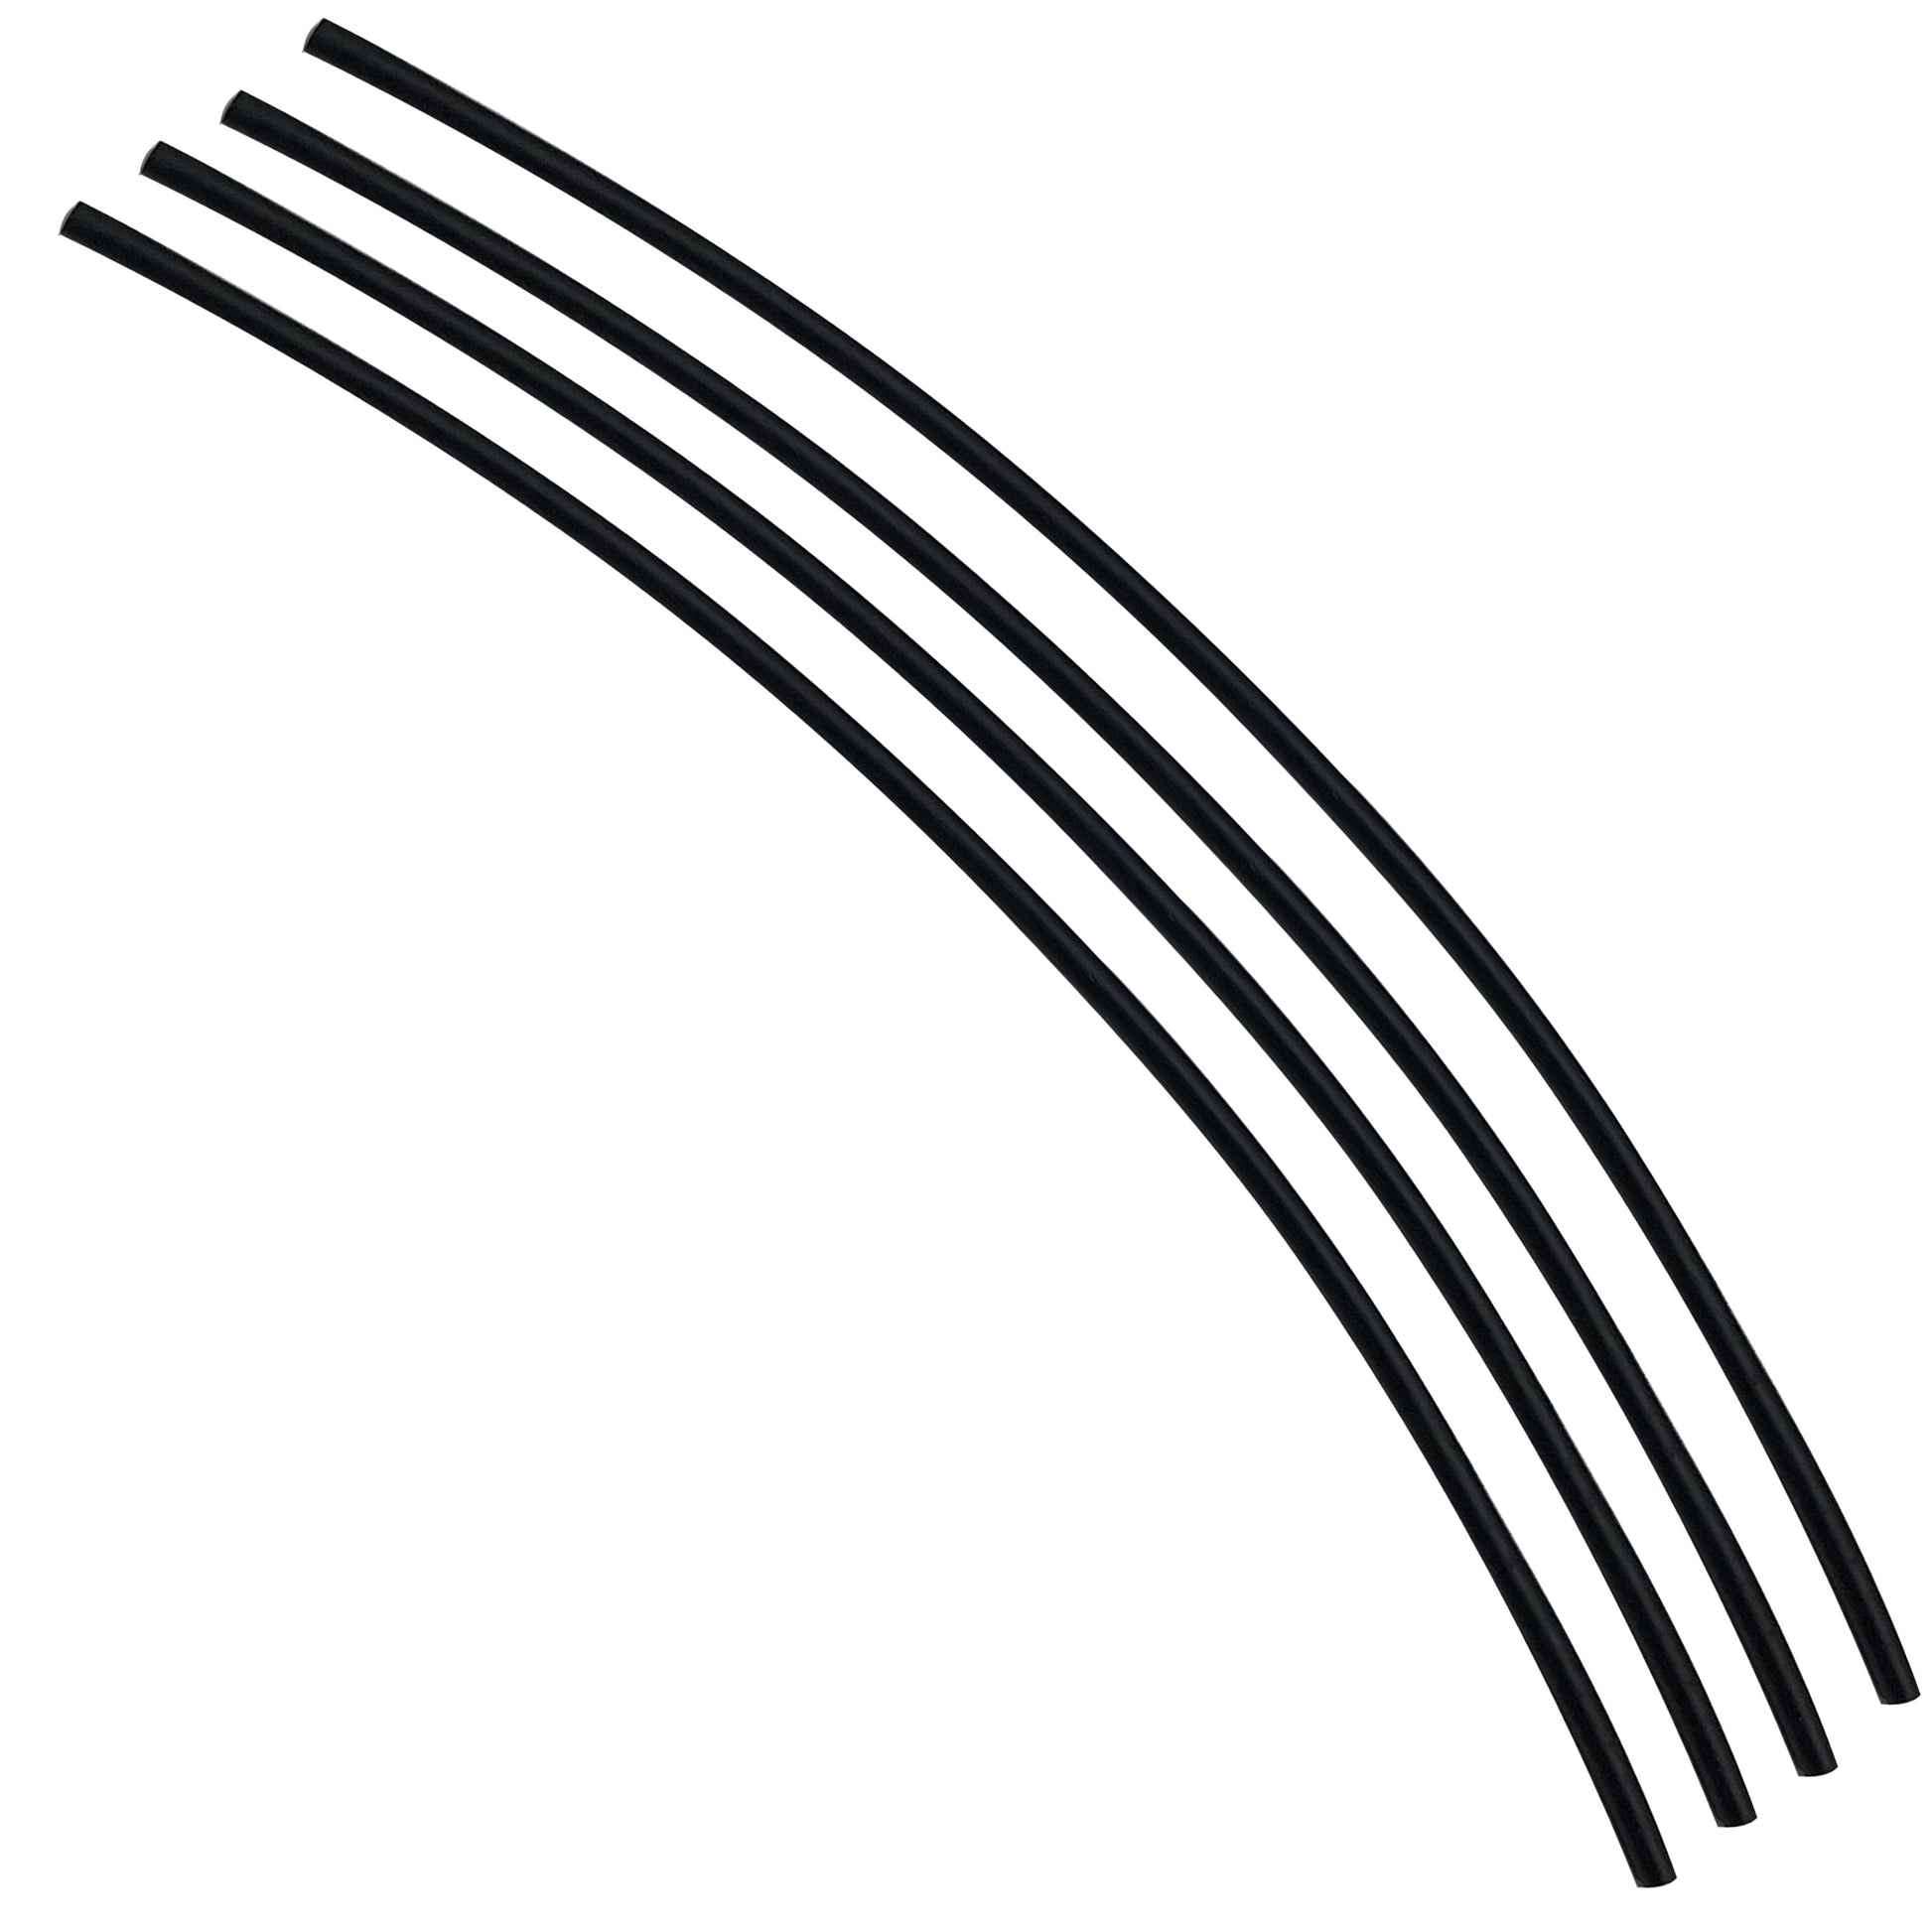 Flexible Thin Single Wall Non-Adhesive Heat Shrink Tubing 2:1 Black 3/32" ID - 100' Ft Spool